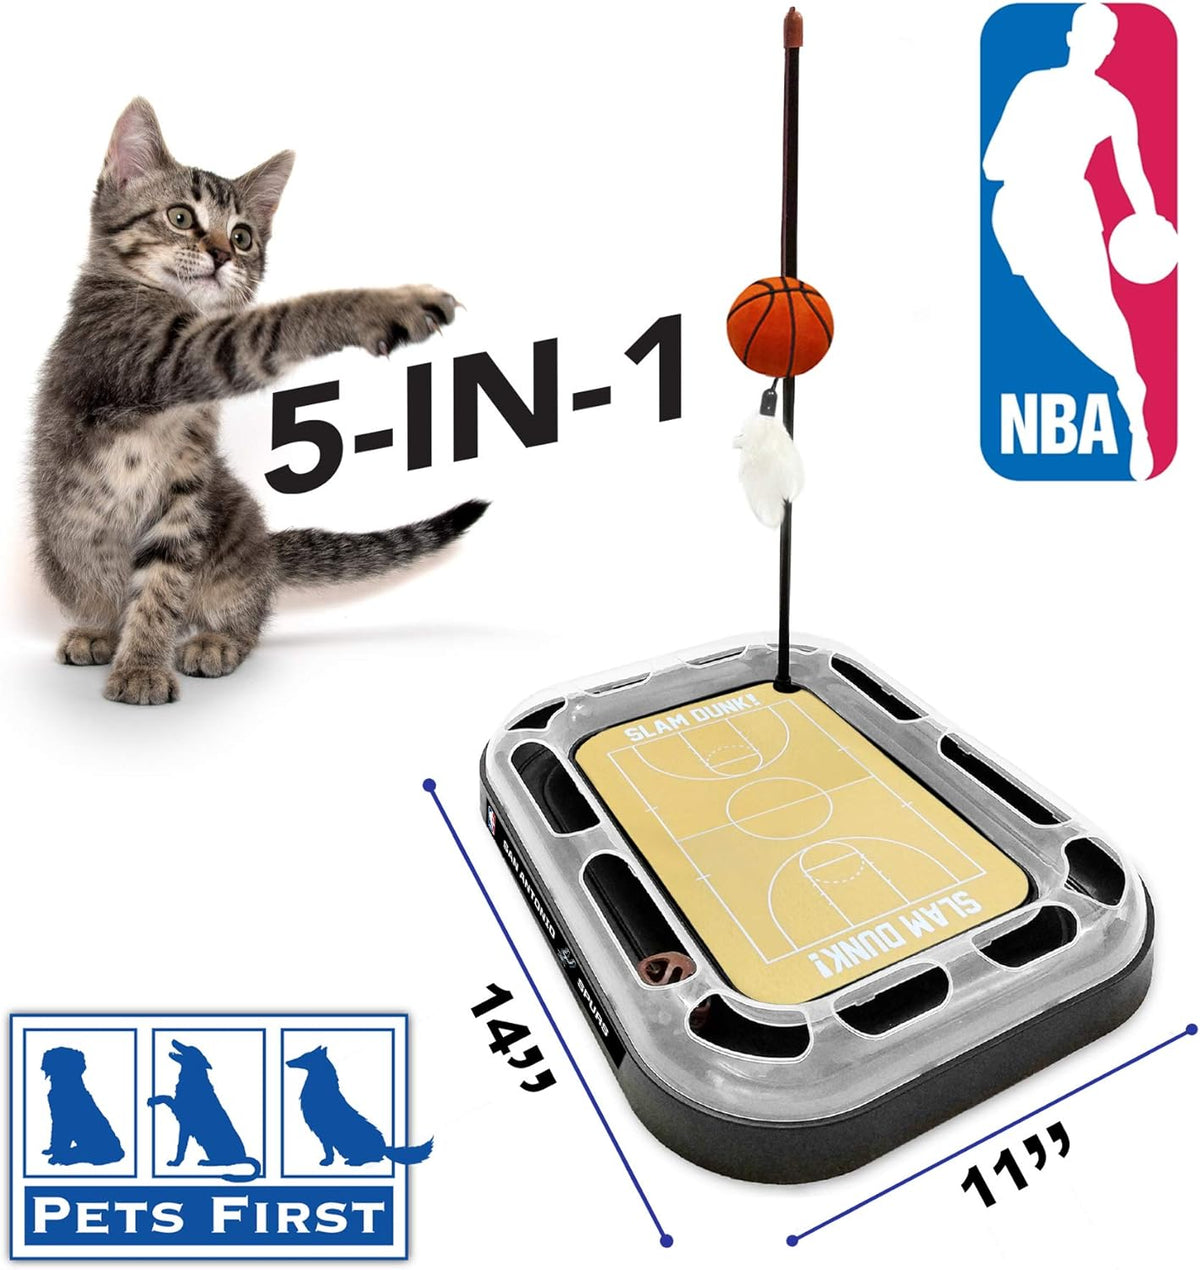 San Antonio Spurs Basketball Cat Scratcher Toy